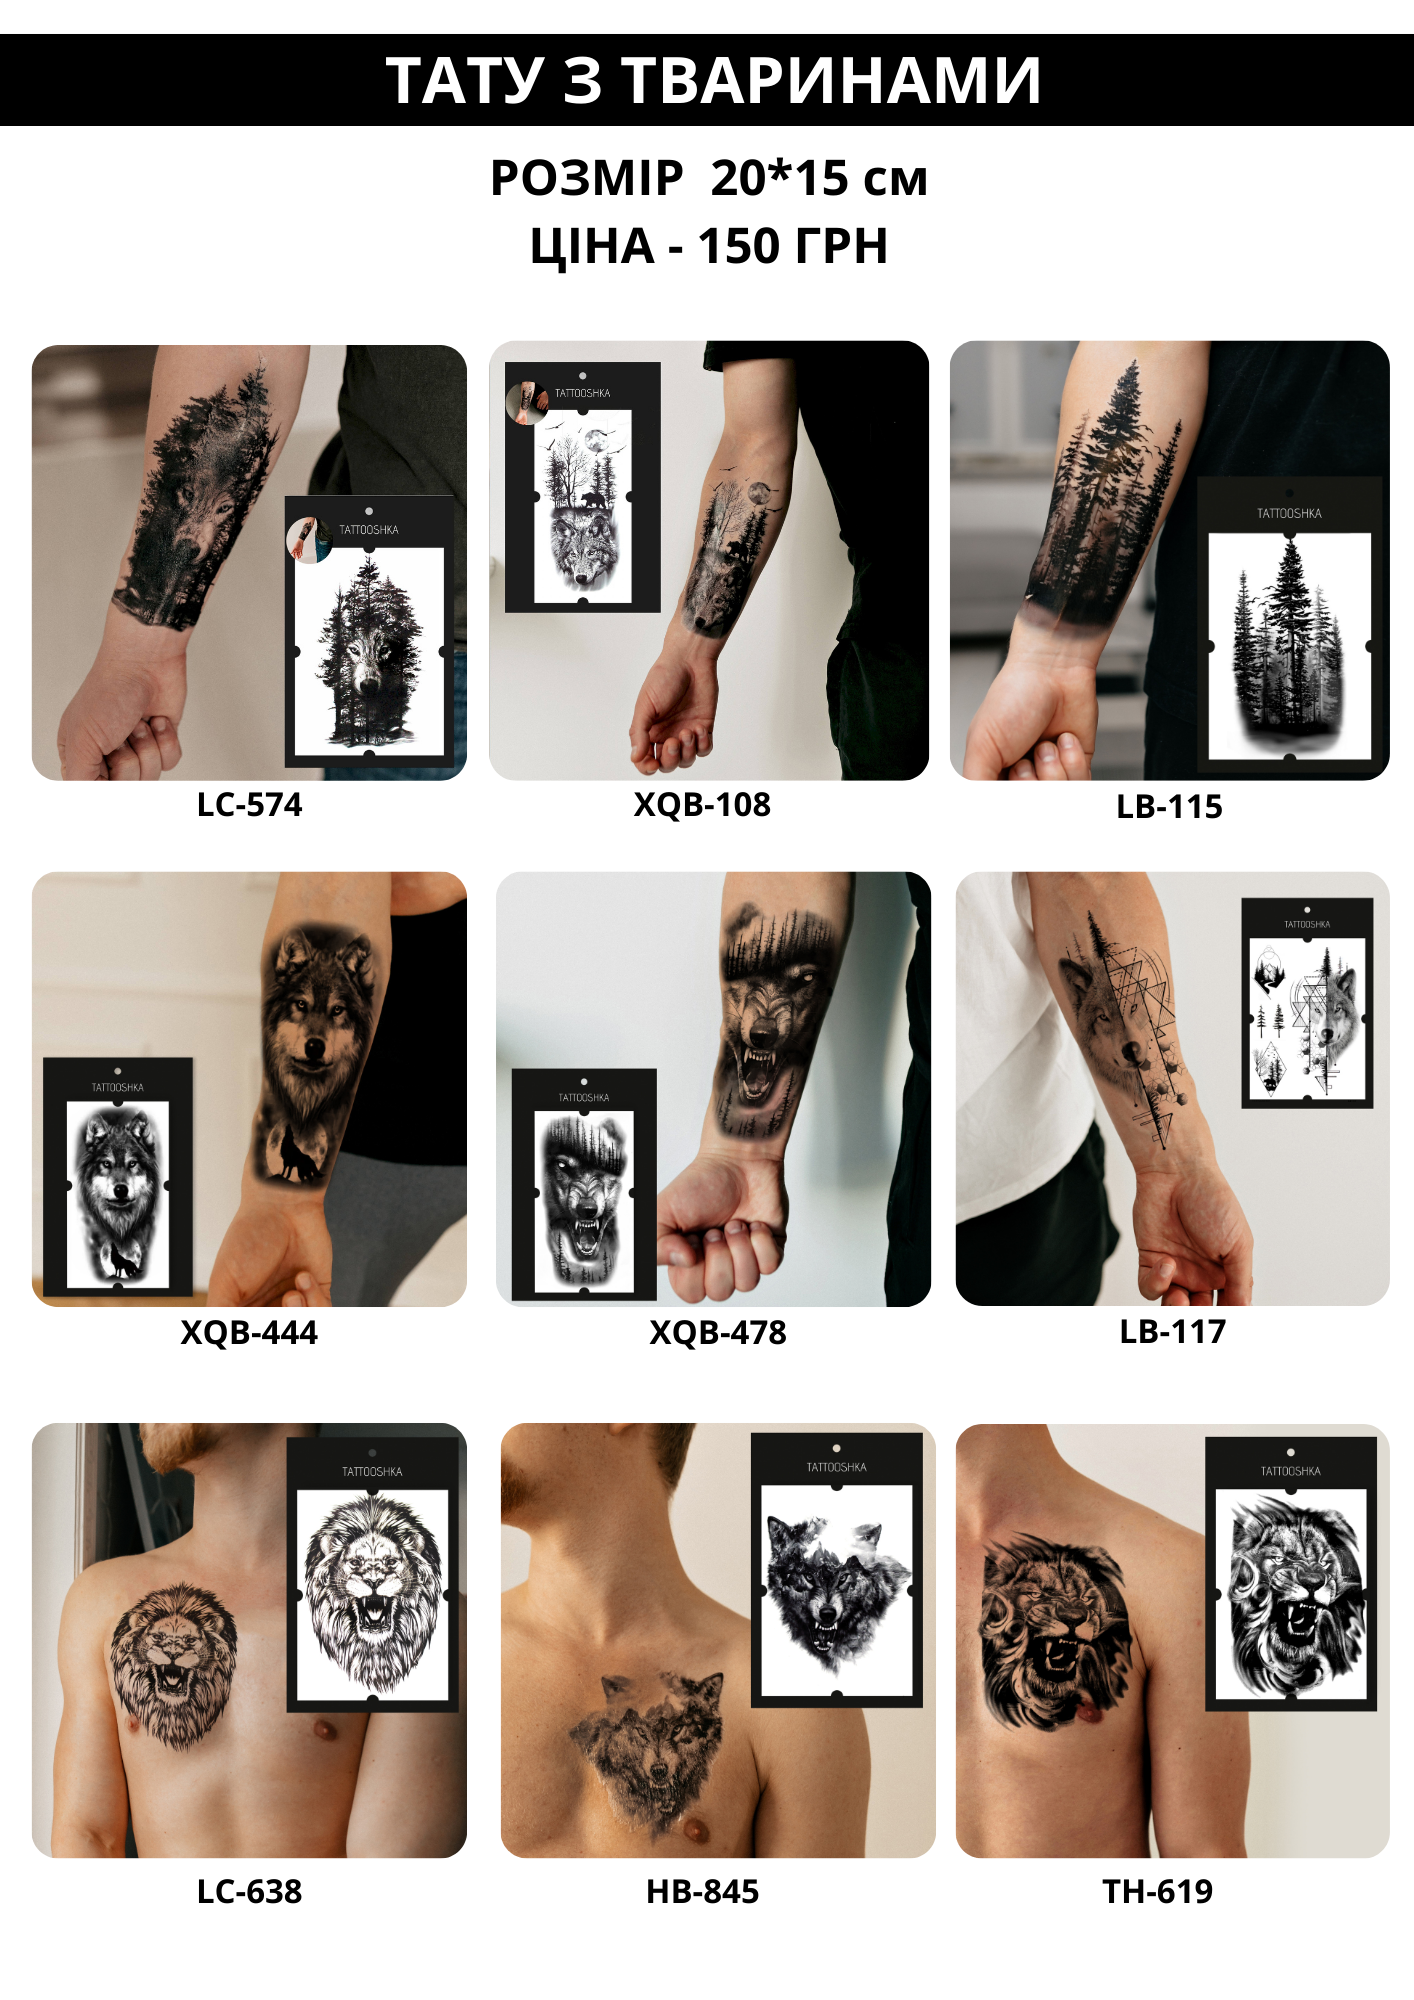 Каталог tattooshka man